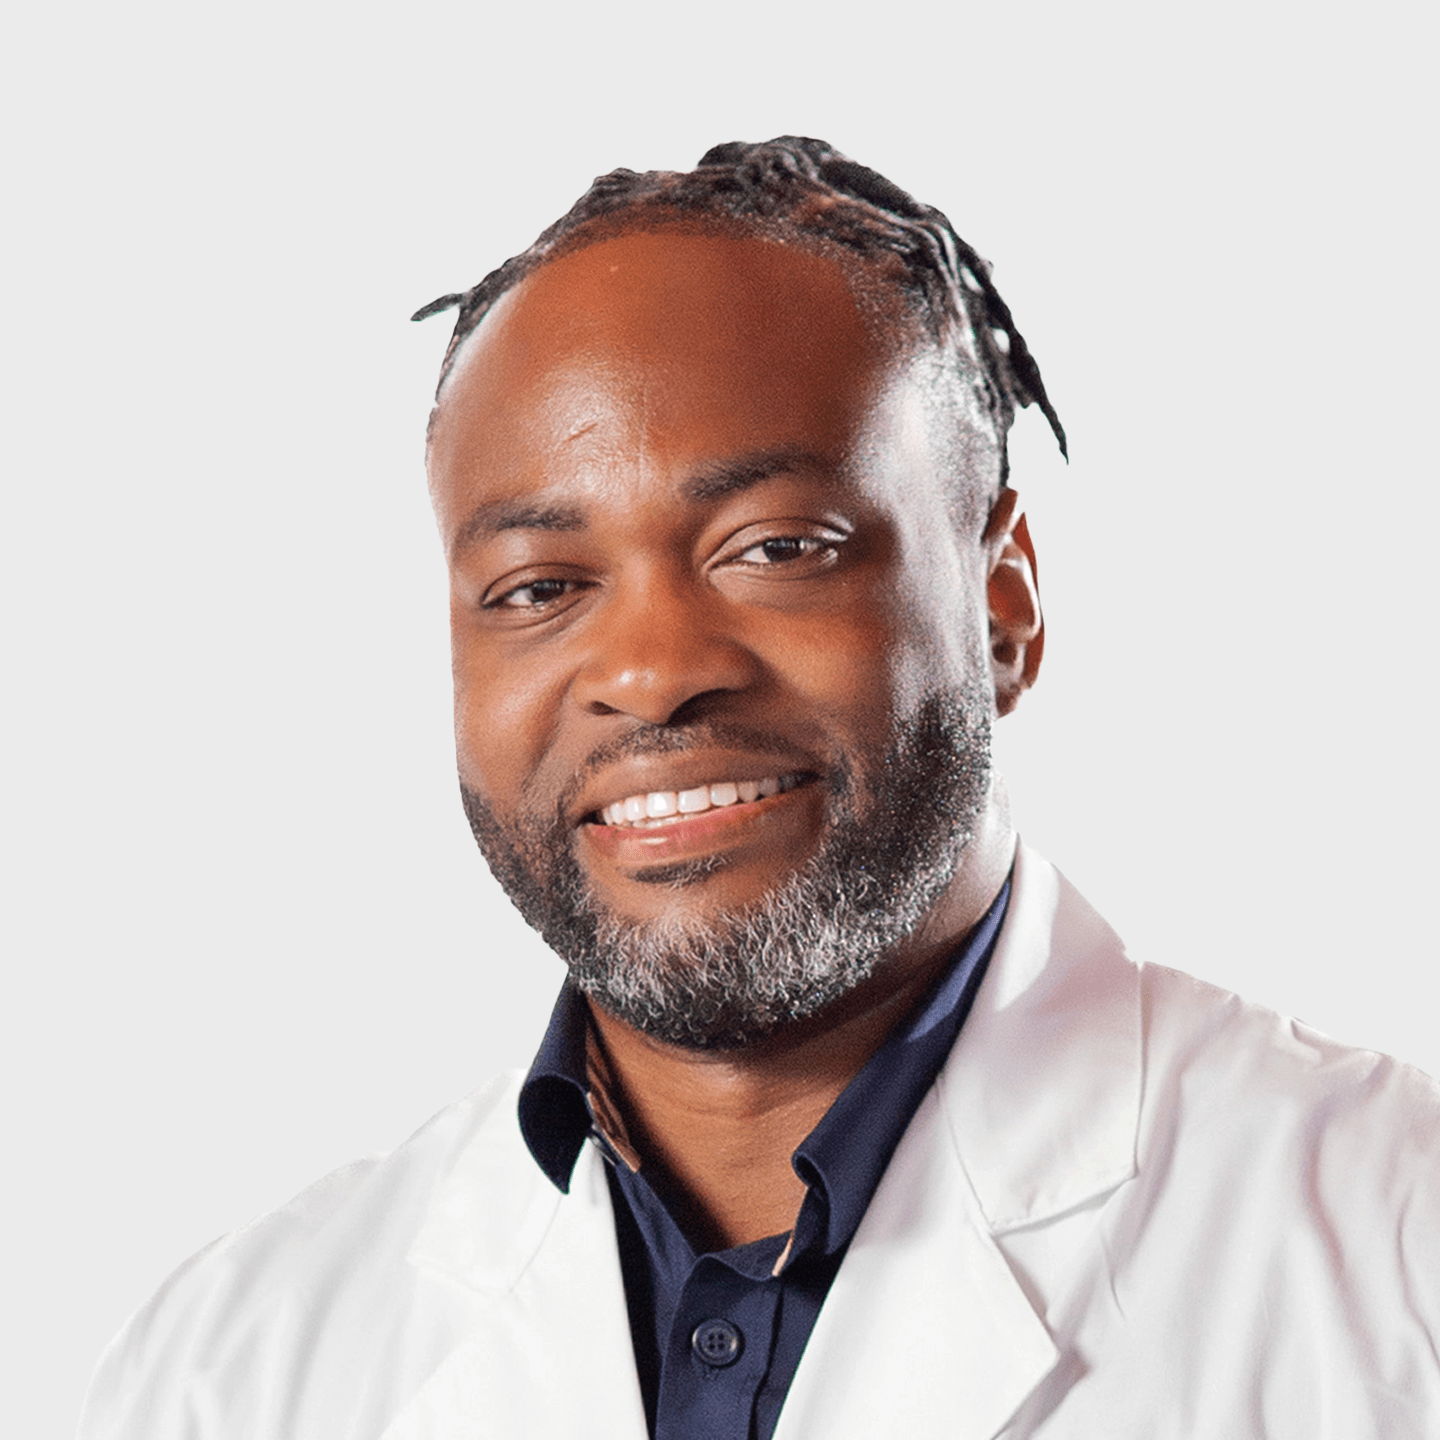 Physician Spotlight on Dr. Adebola Adeleke